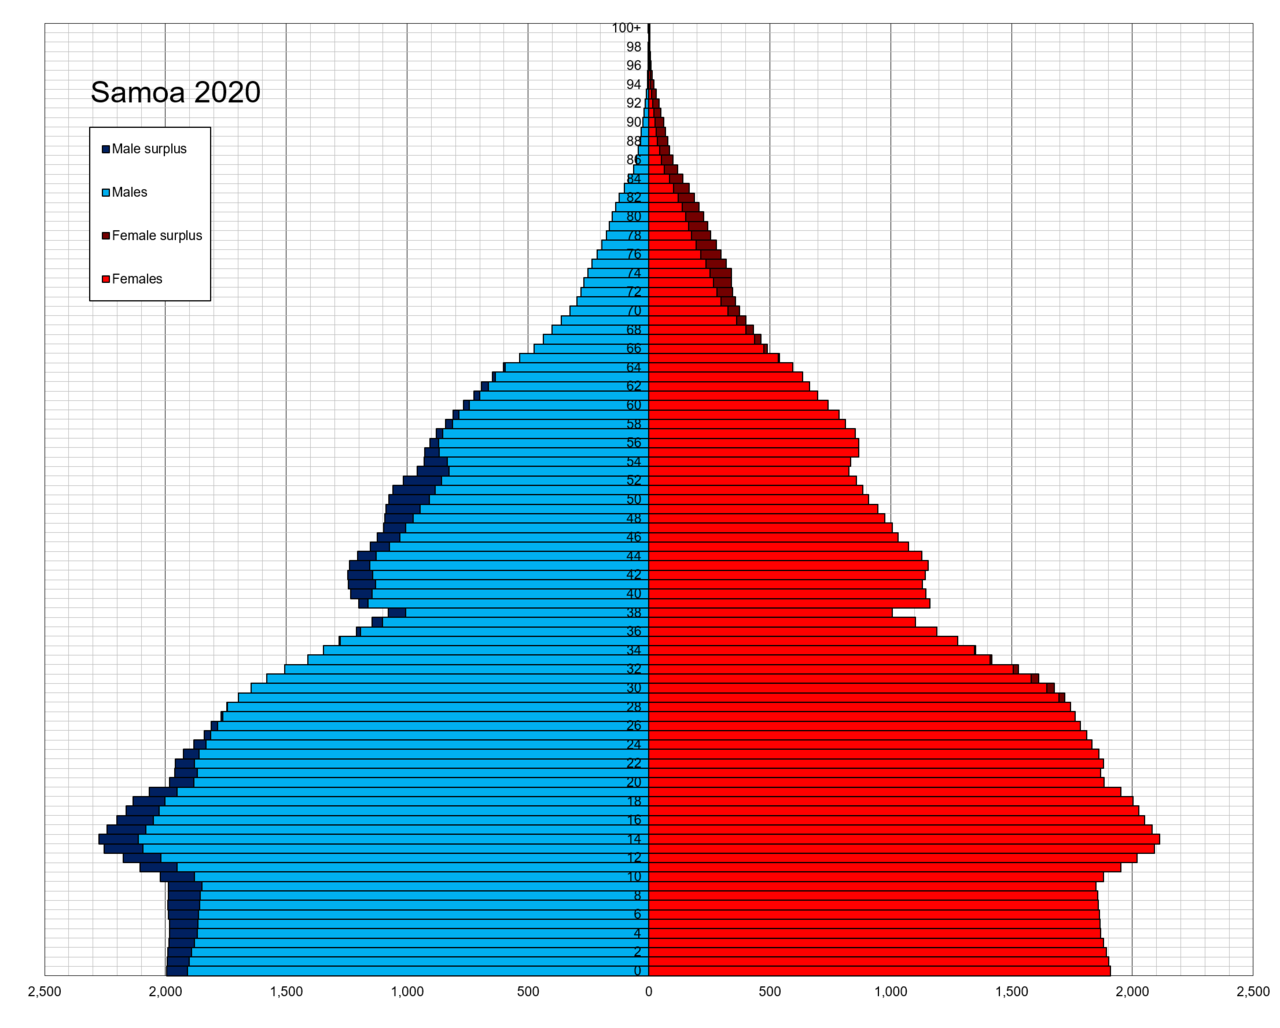 Samoa single age population pyramid 2020.png